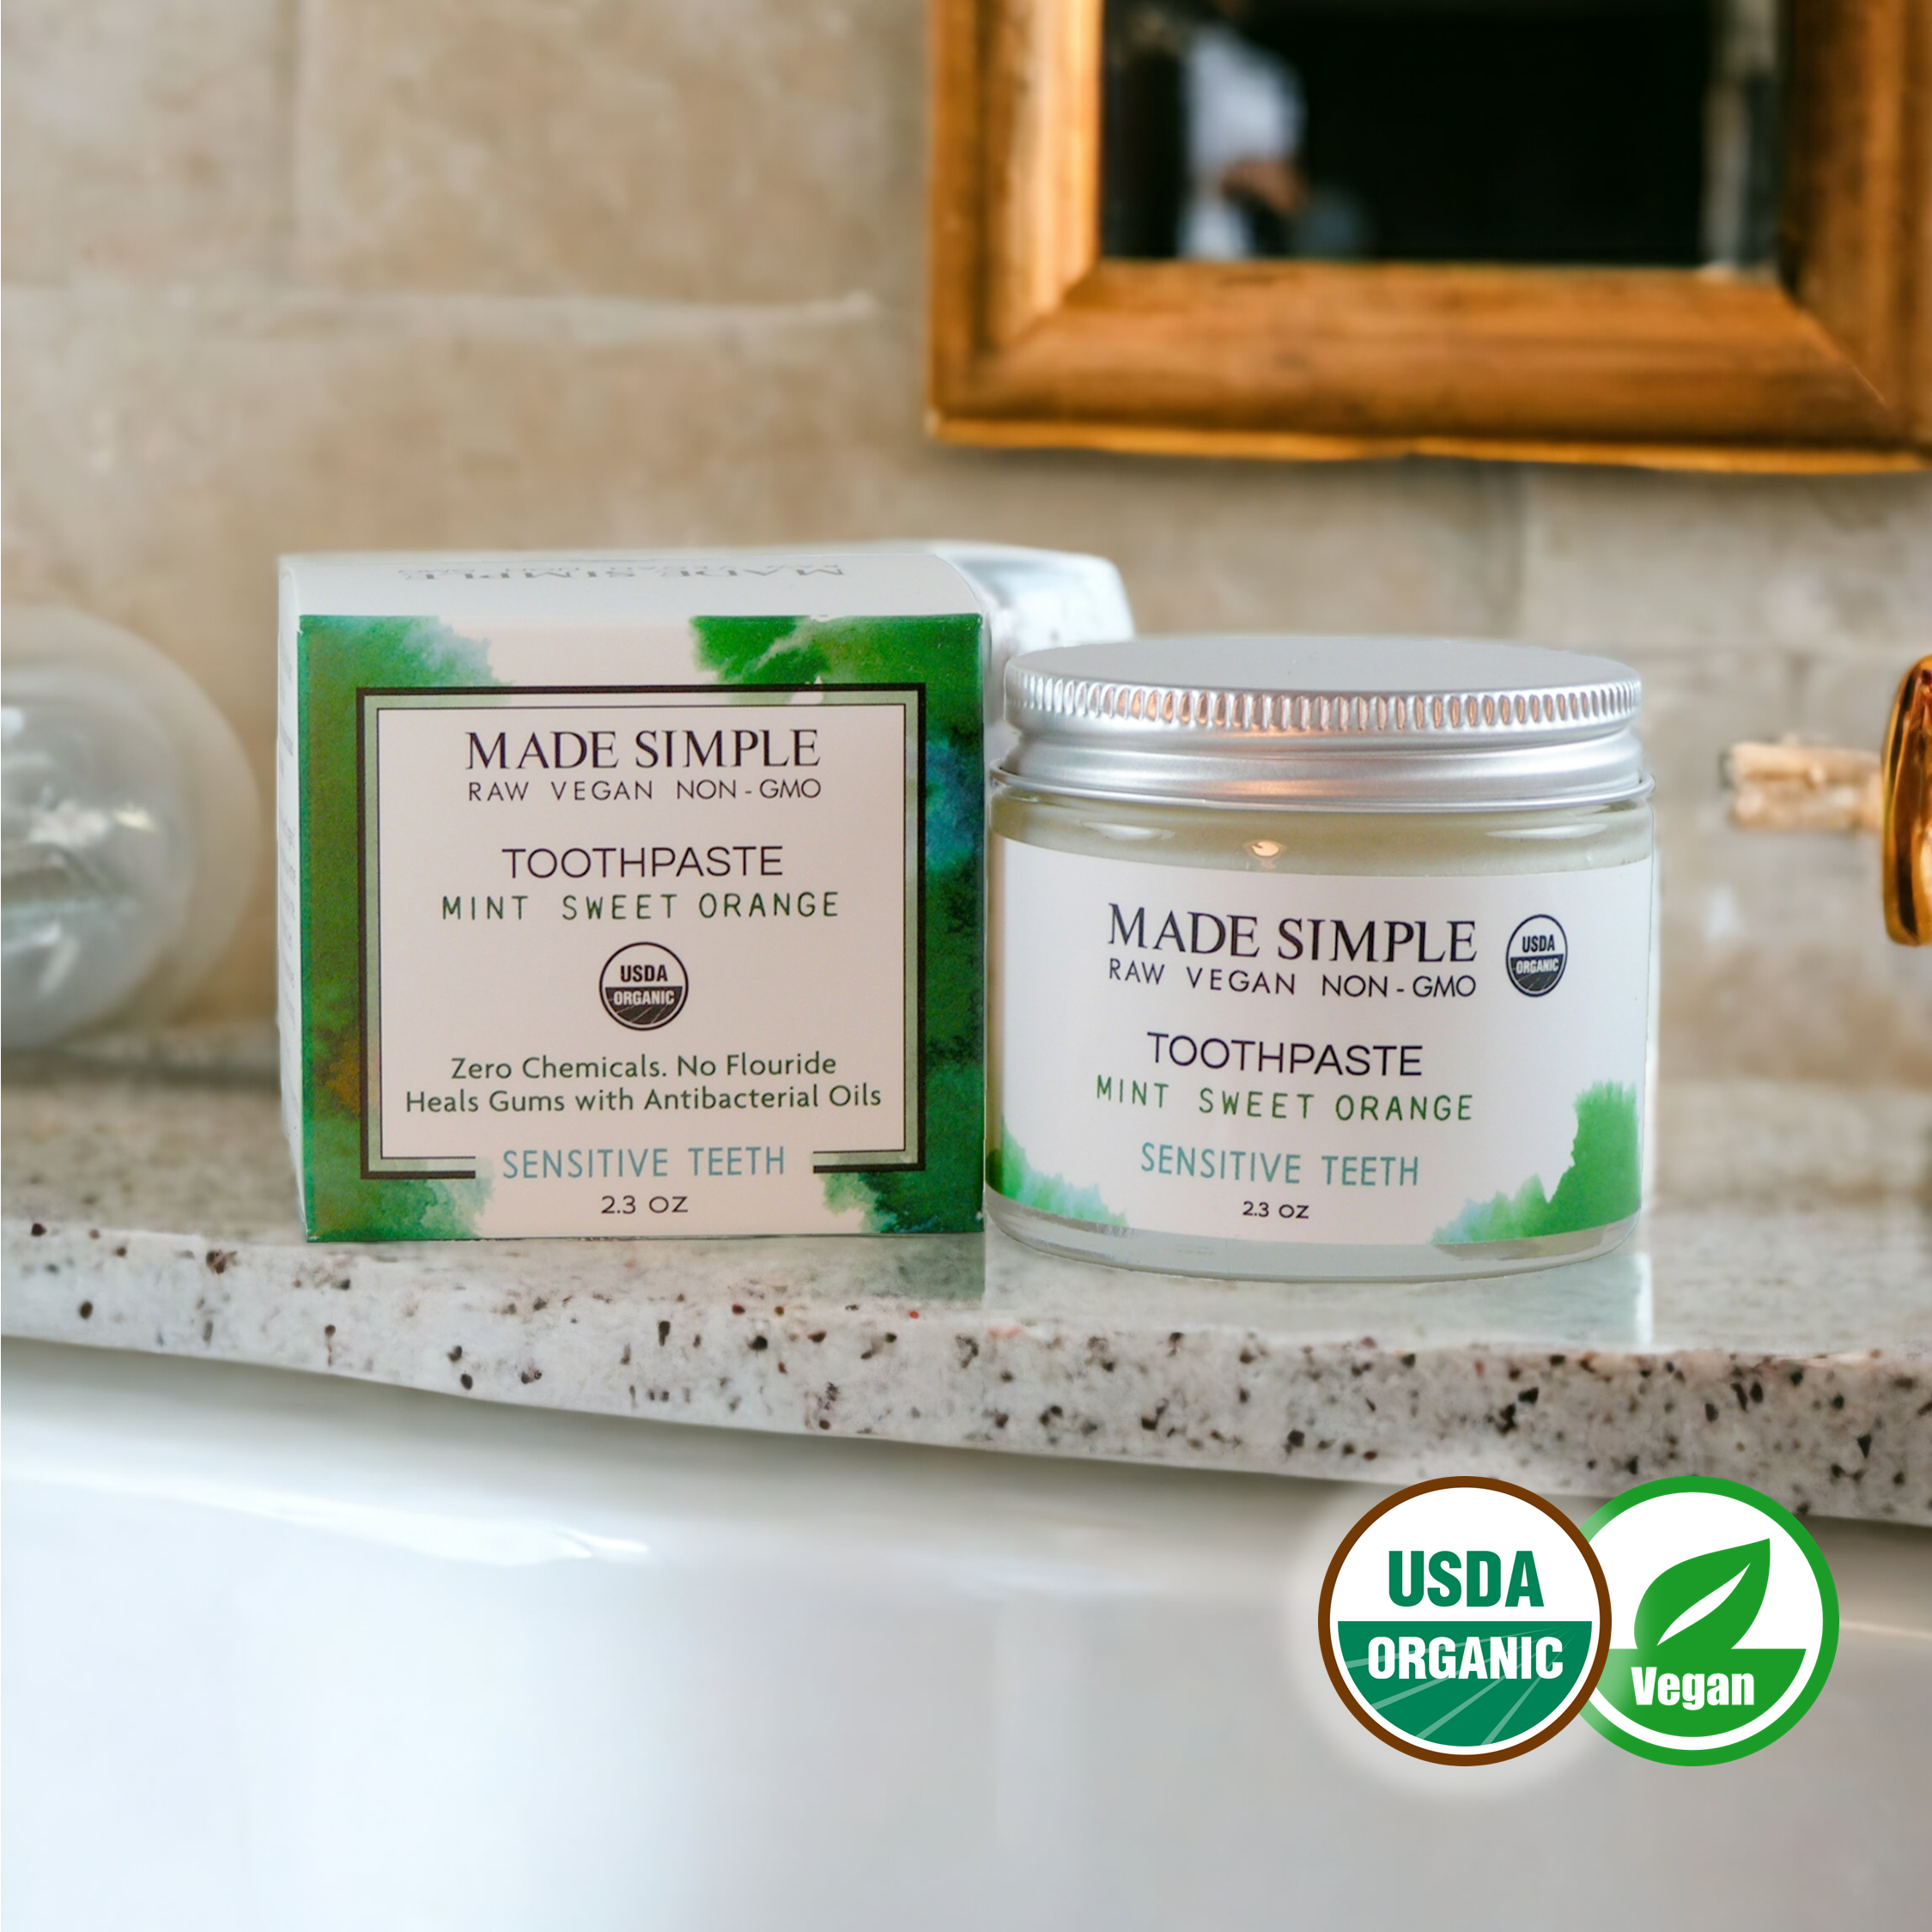 Made Simple Skin Care certified organic raw vegan nonGMO Crueltyfree mint sweet orange toothpaste